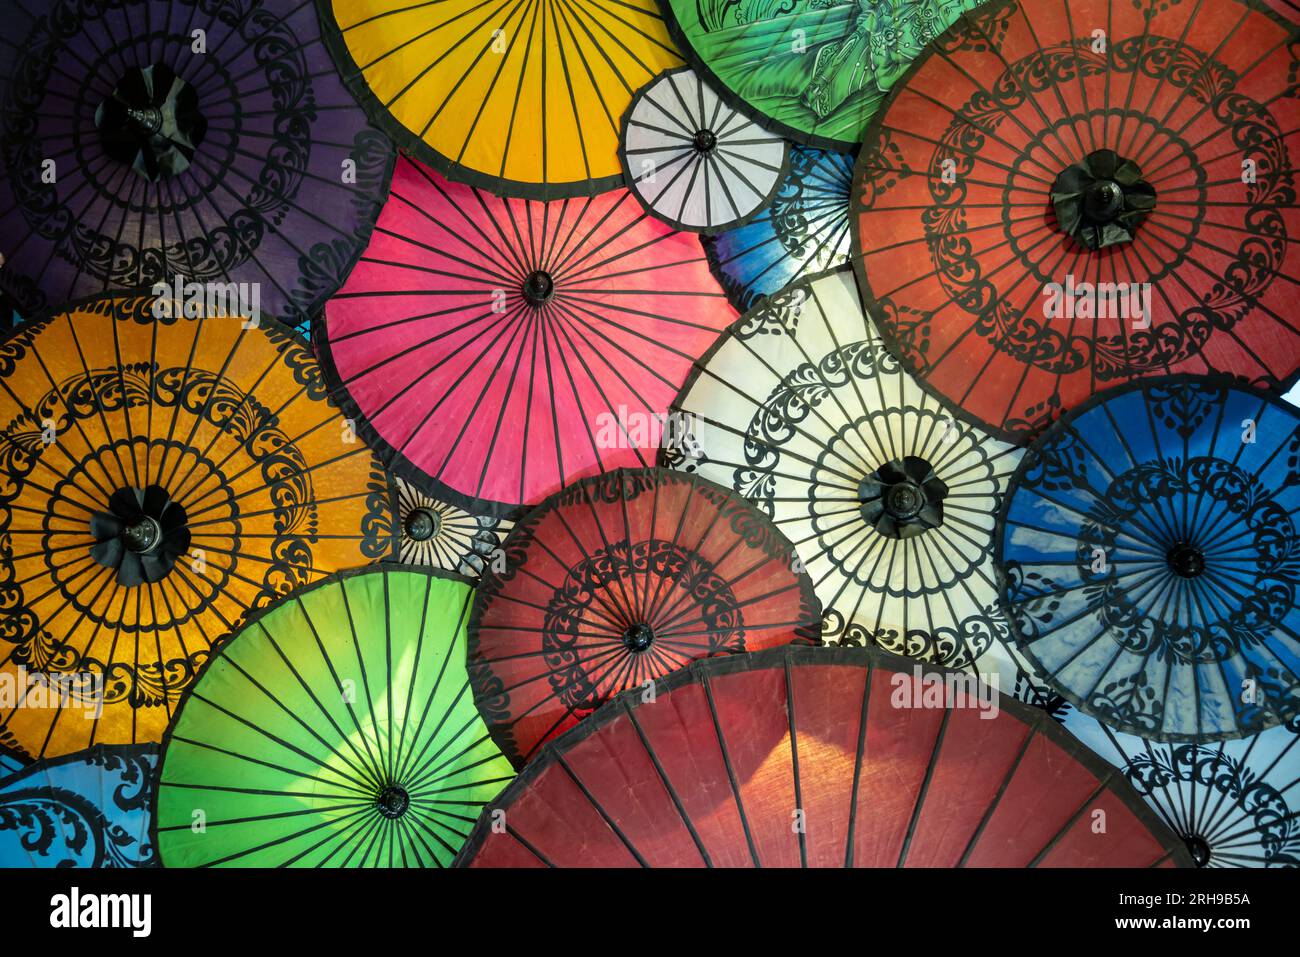 Display of colorful umbrellas in Burma, Myanmar Stock Photo